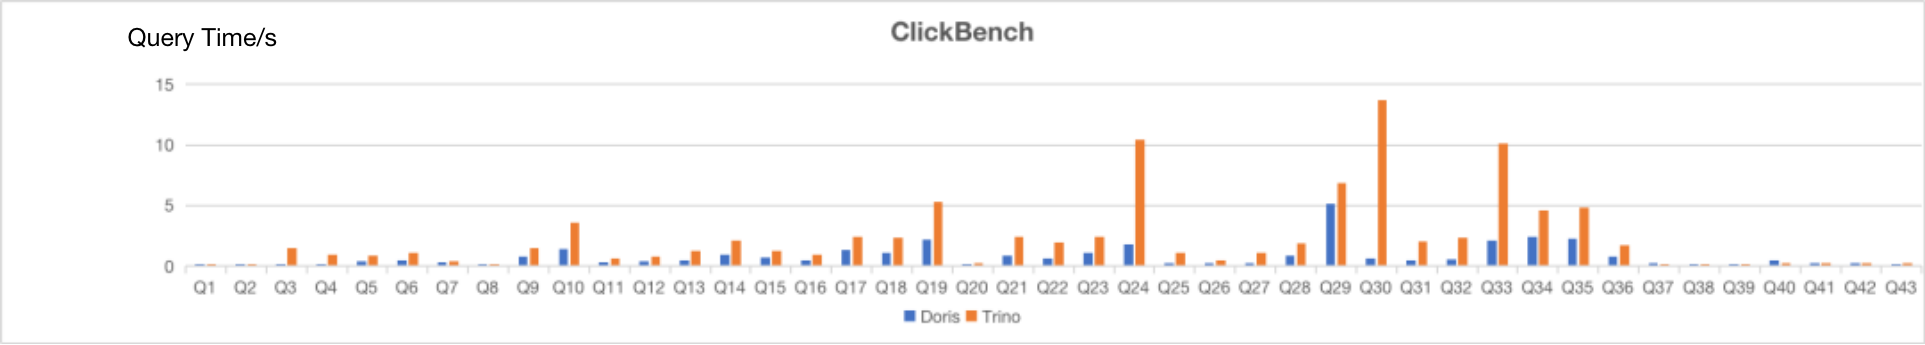 Apache-Doris-VS-Trino-Presto-ClickBench